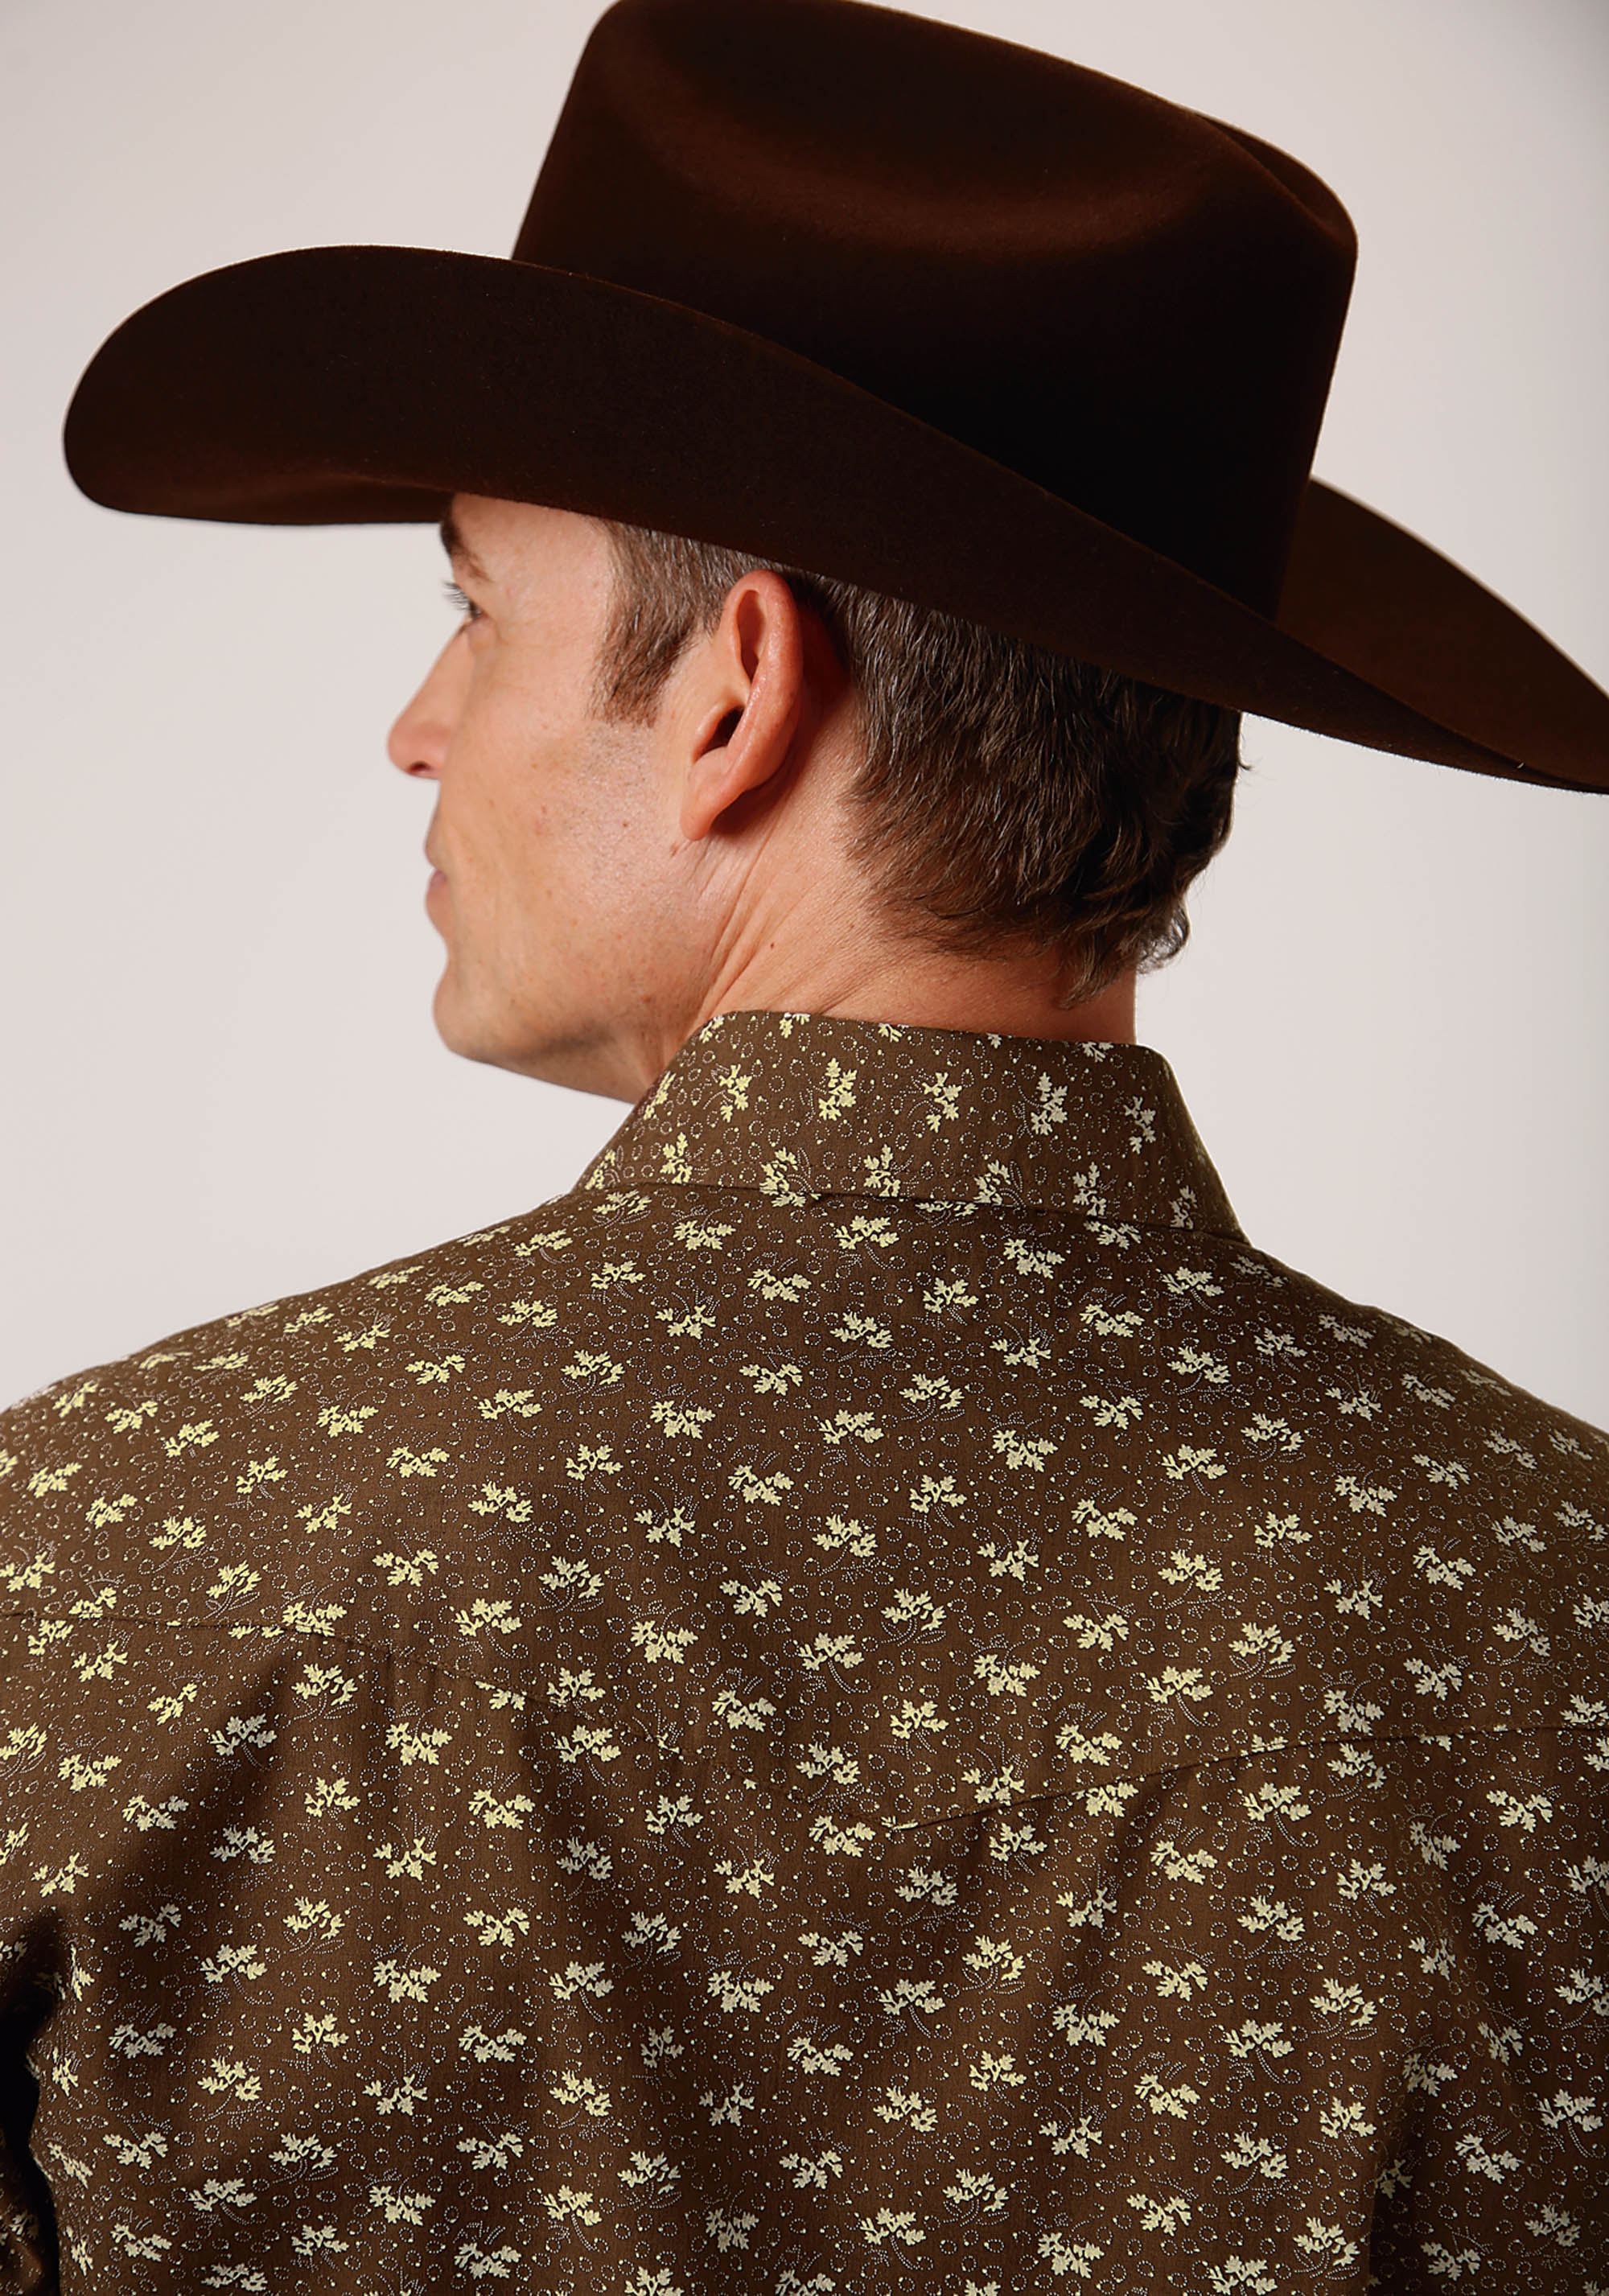 Roper Mens Brown And Cream Leaf Print Long Sleeve Snap Western Shirt